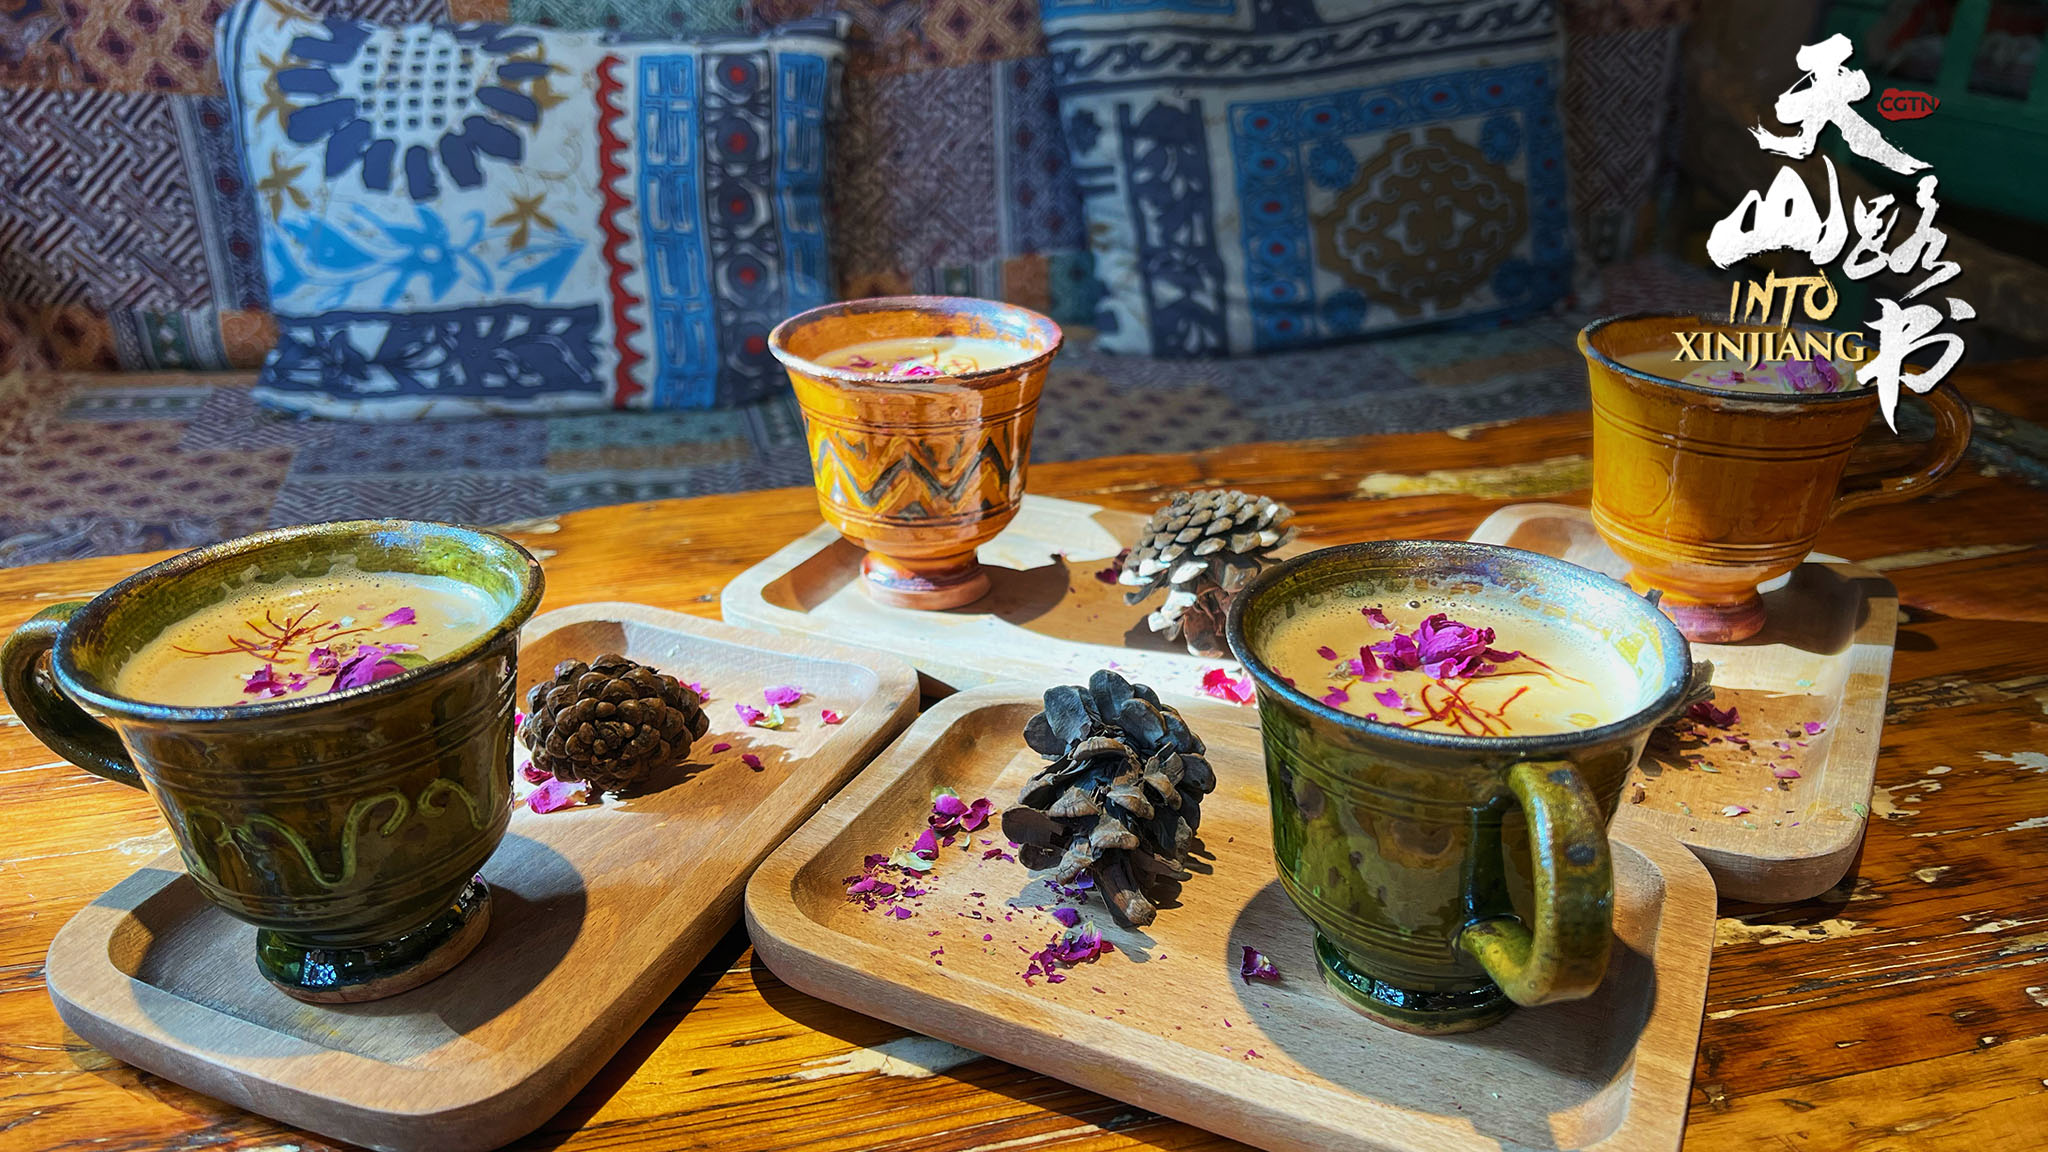 Get a taste of 'Kashgar coffee' at Kashgar old town in Xinjiang - CGTN